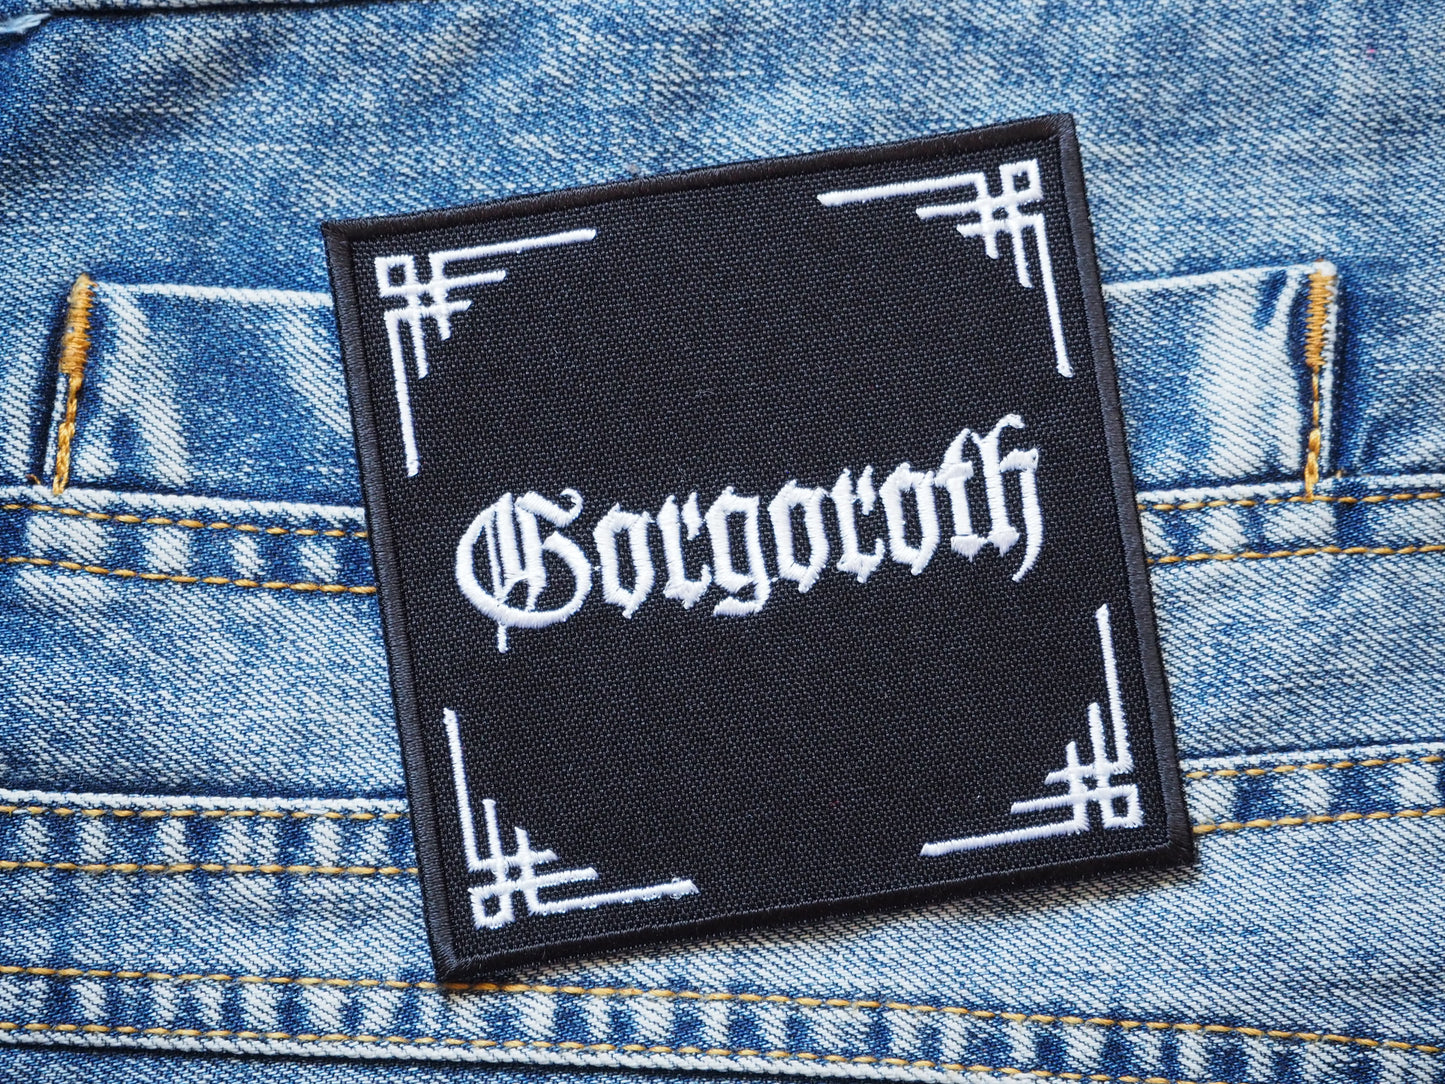 Gorgoroth Patch (Black Metal)